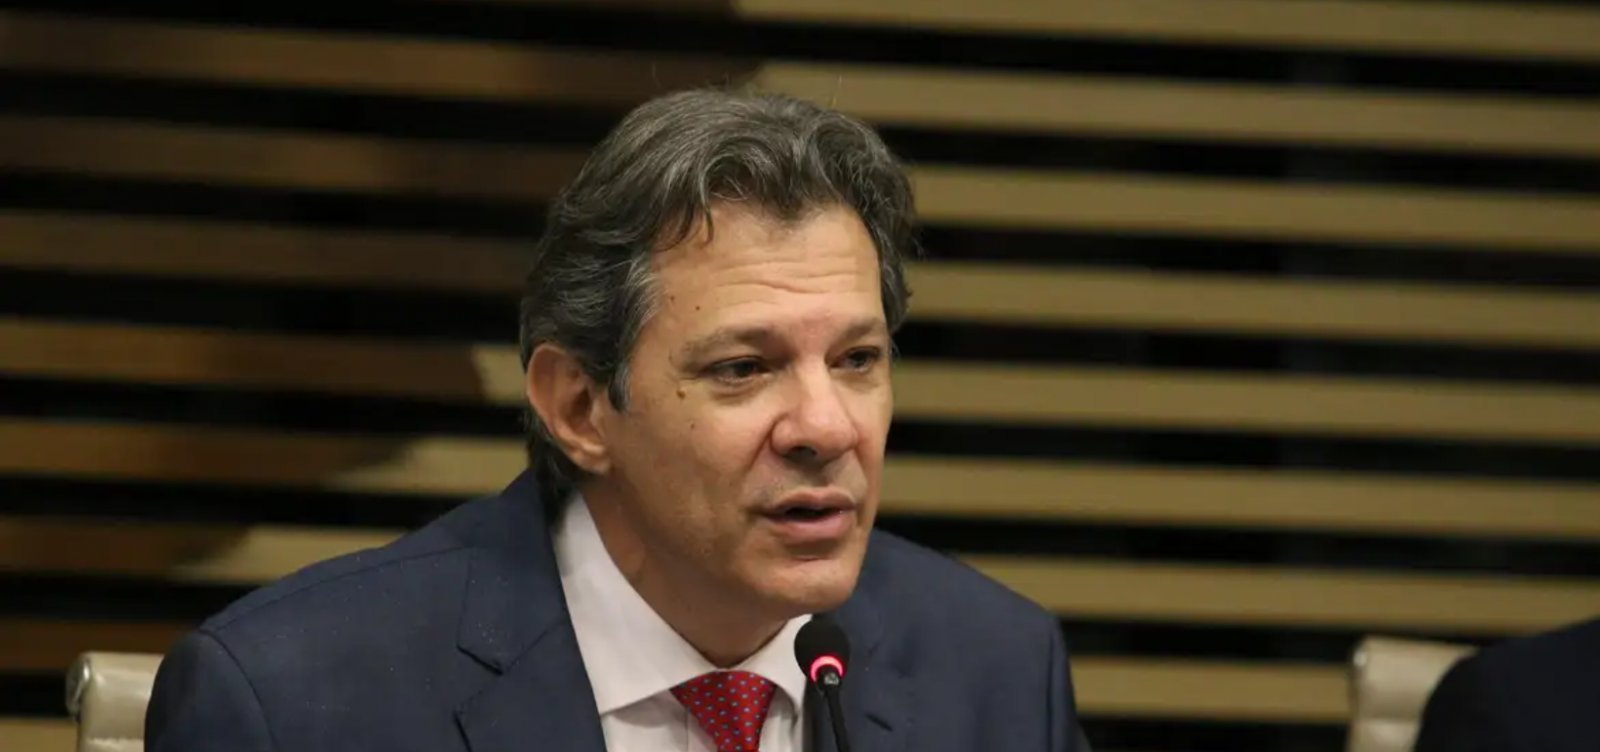 Brasil virou Parlamentarismo que, se der errado, dissolve a Presidência, diz Fernando Haddad